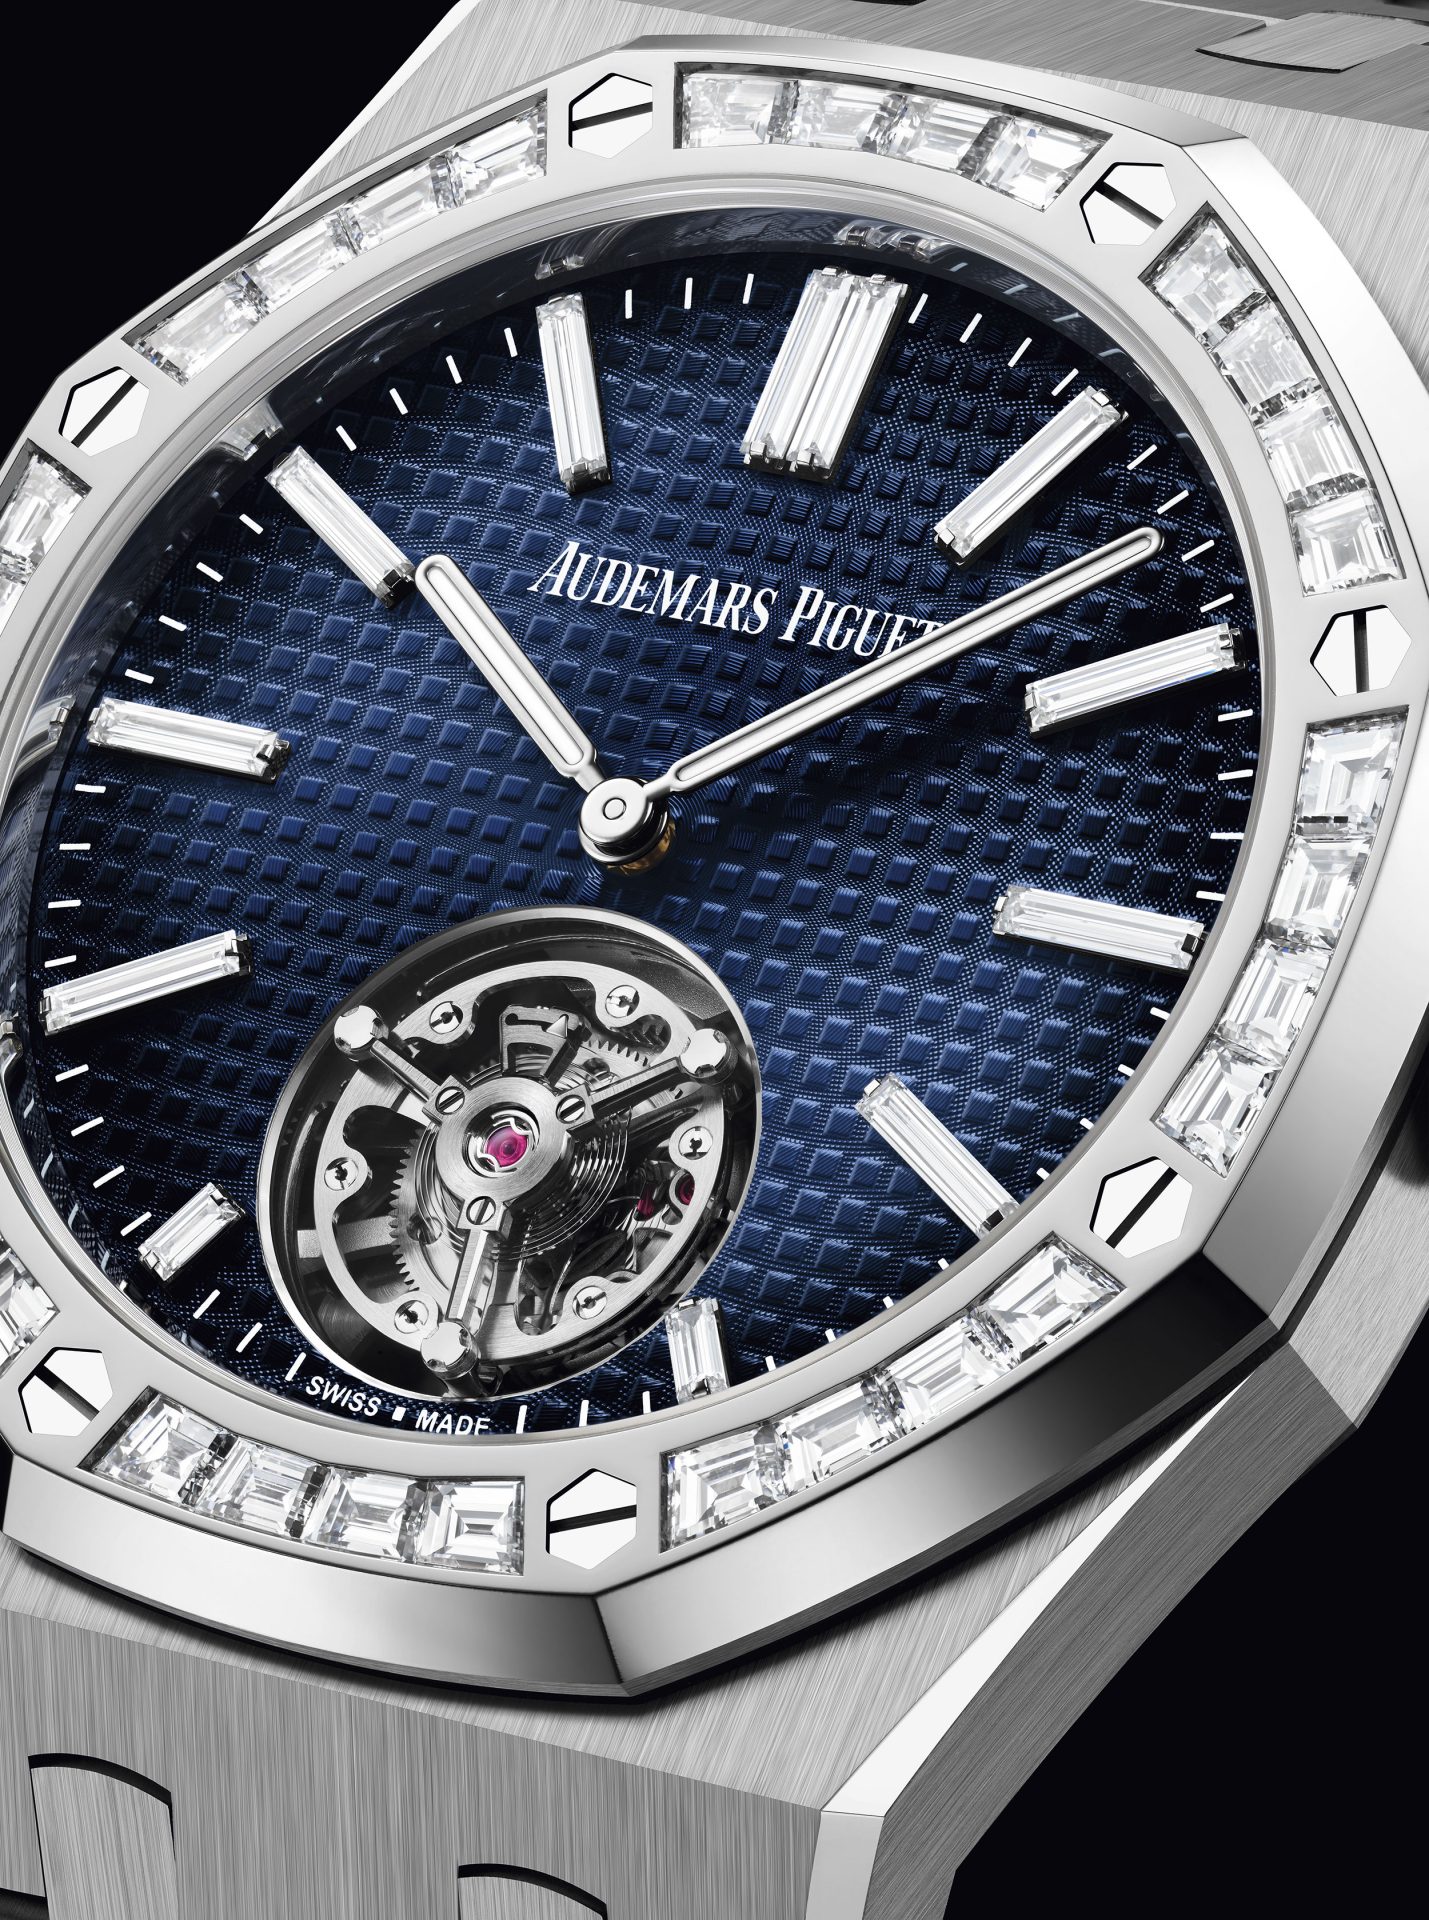 Reloj de Audemars Piguet con diamantes